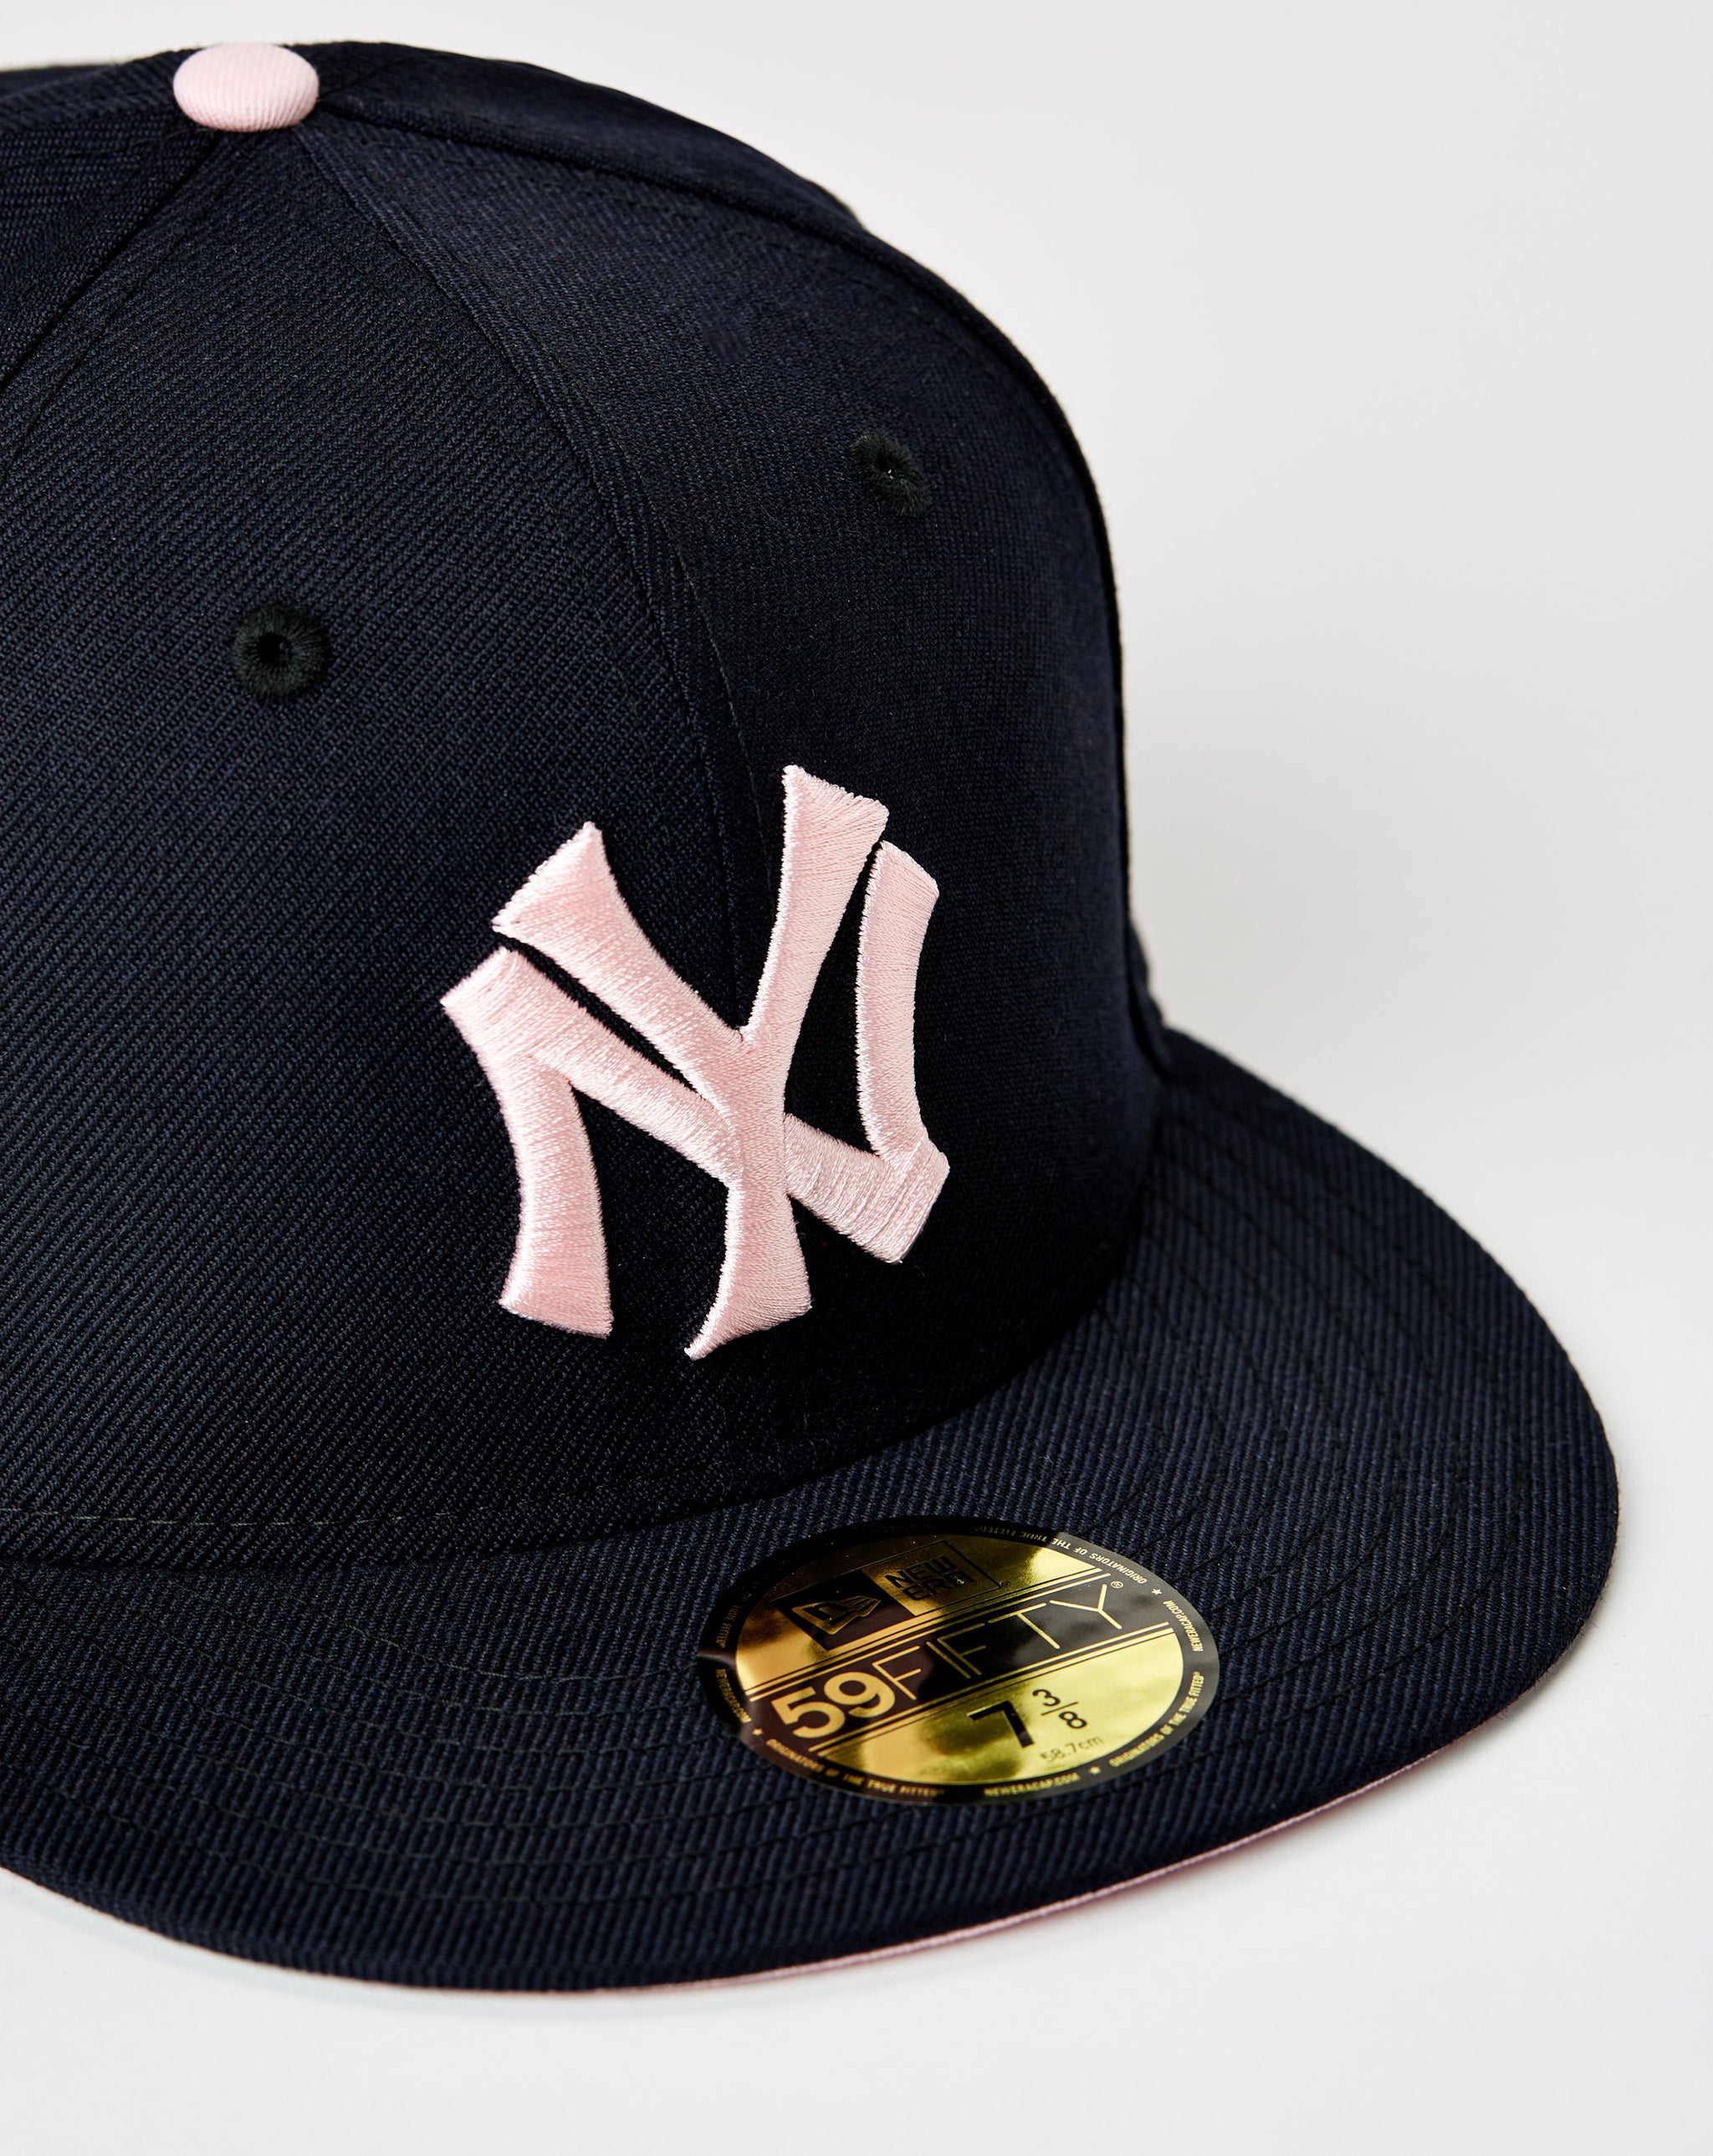 New Era New York Yankees 59Fifty  - Cheap Cerbe Jordan outlet